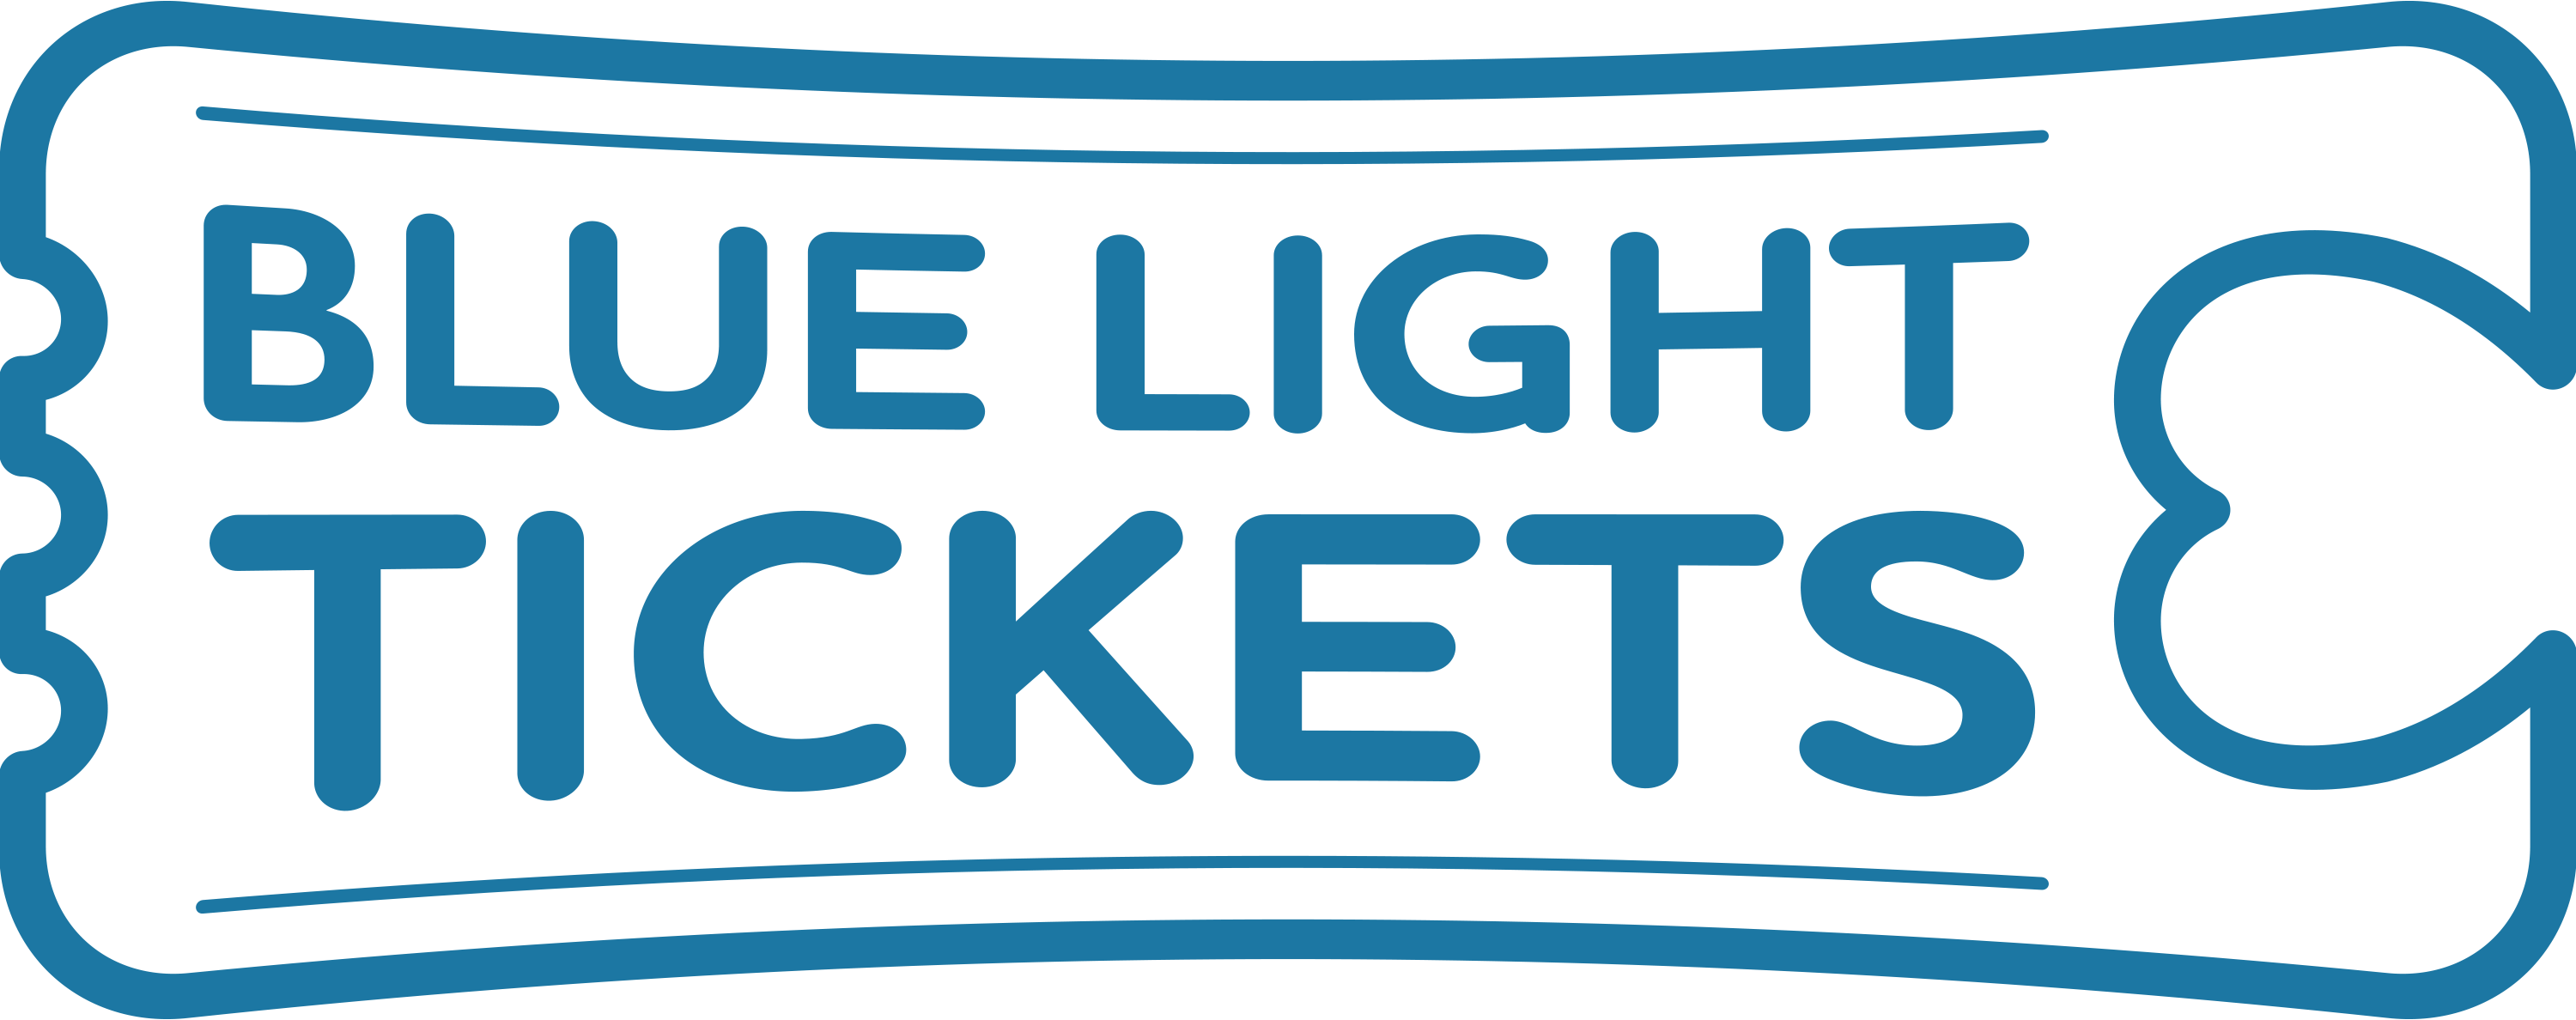 Blue Light Tickets